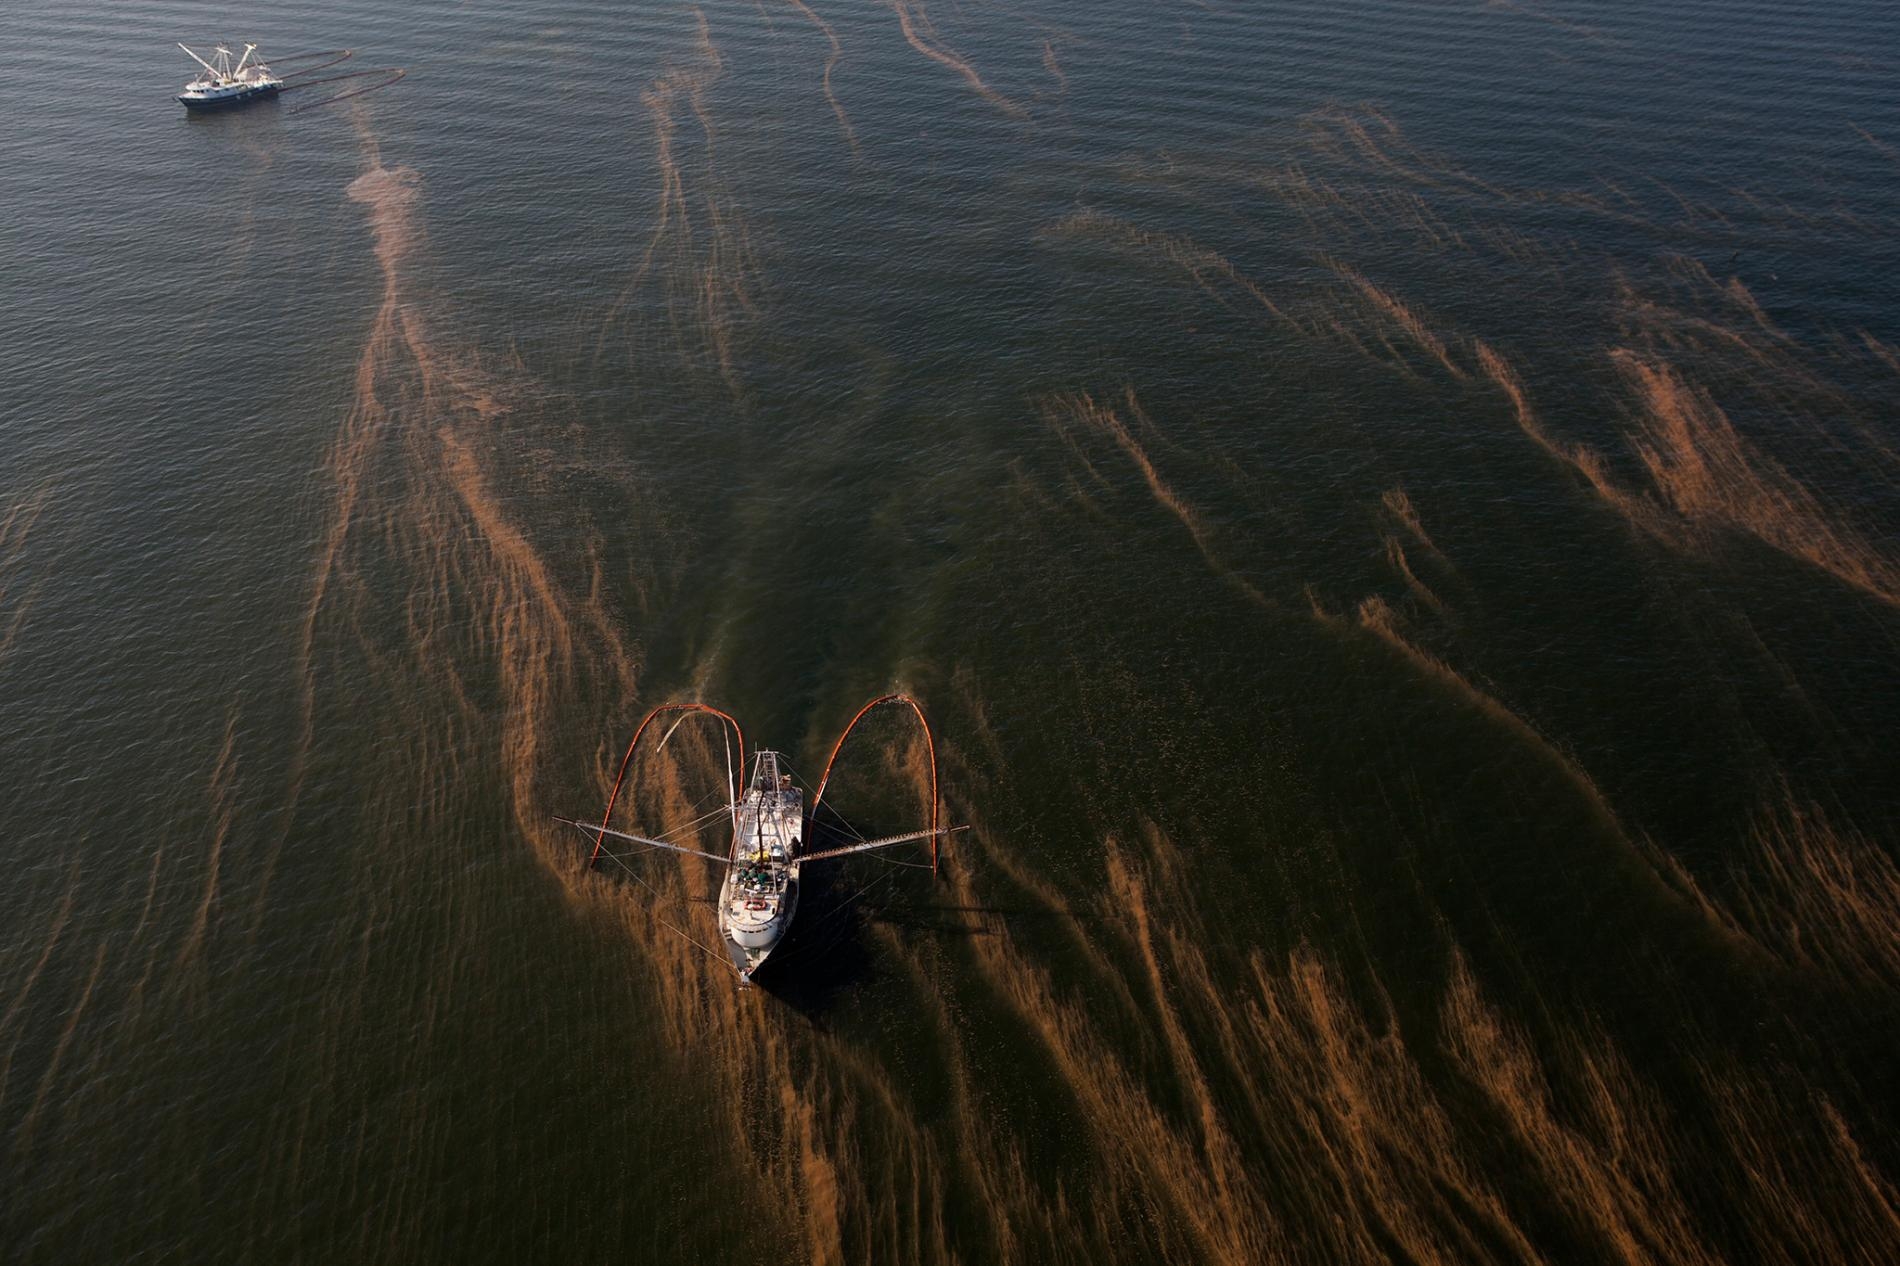 船隻利用圍油欄（absorbent booms）來攔捕深水地平線漏出來的油。PHOTOGRAPH BY TYRONE TURNER, NAT GEO IMAGE COLLECTION